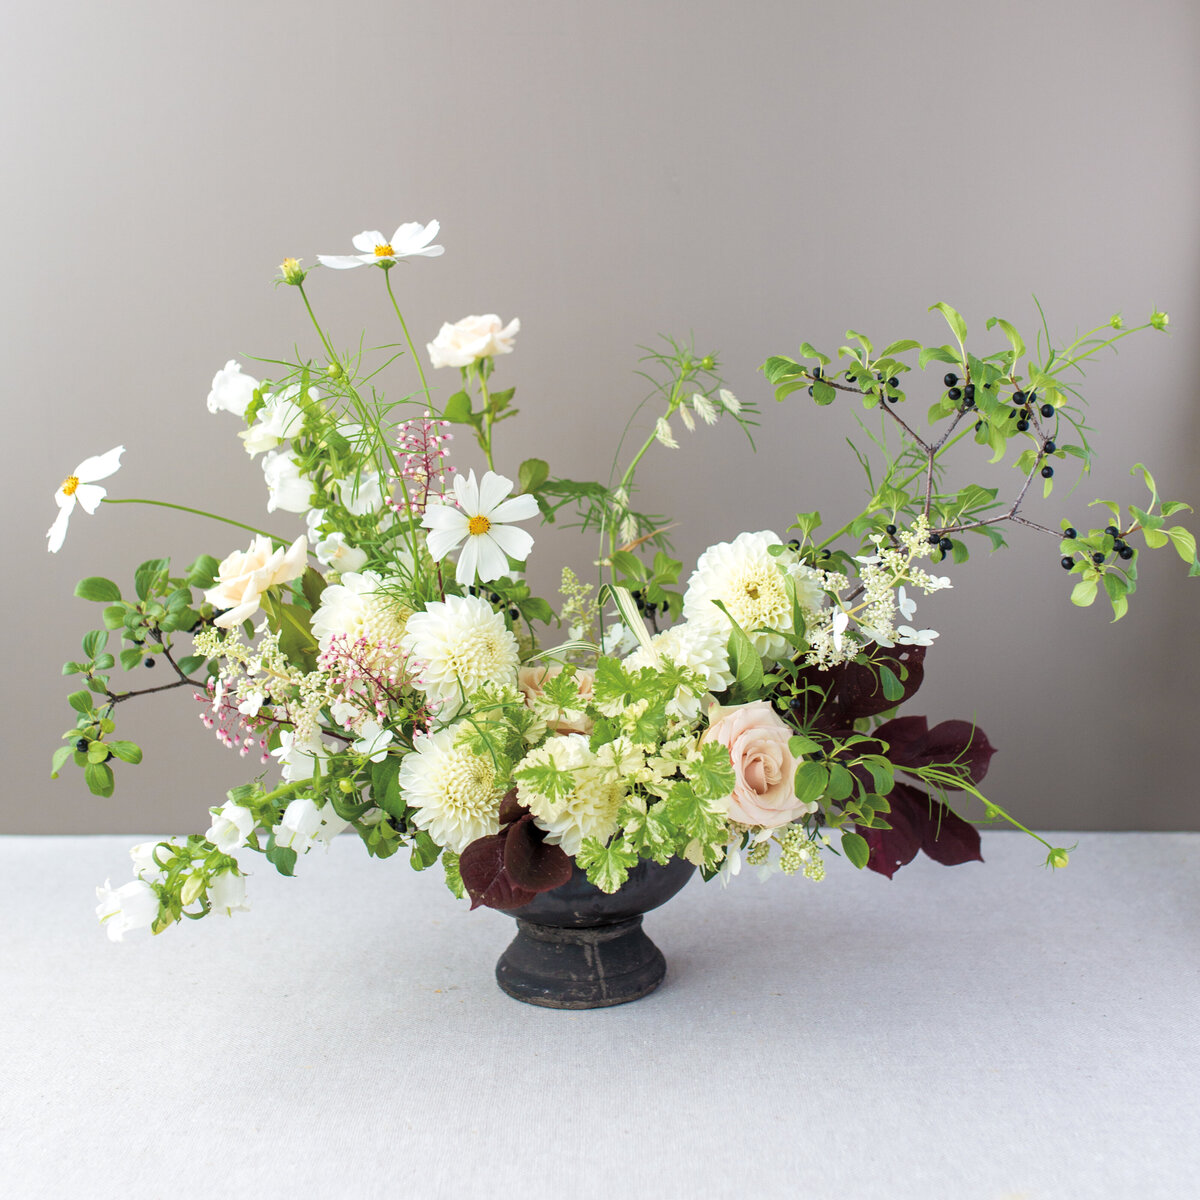 Atelier-Carmel-Wedding-Florist-GALLERY-Arrangements-11